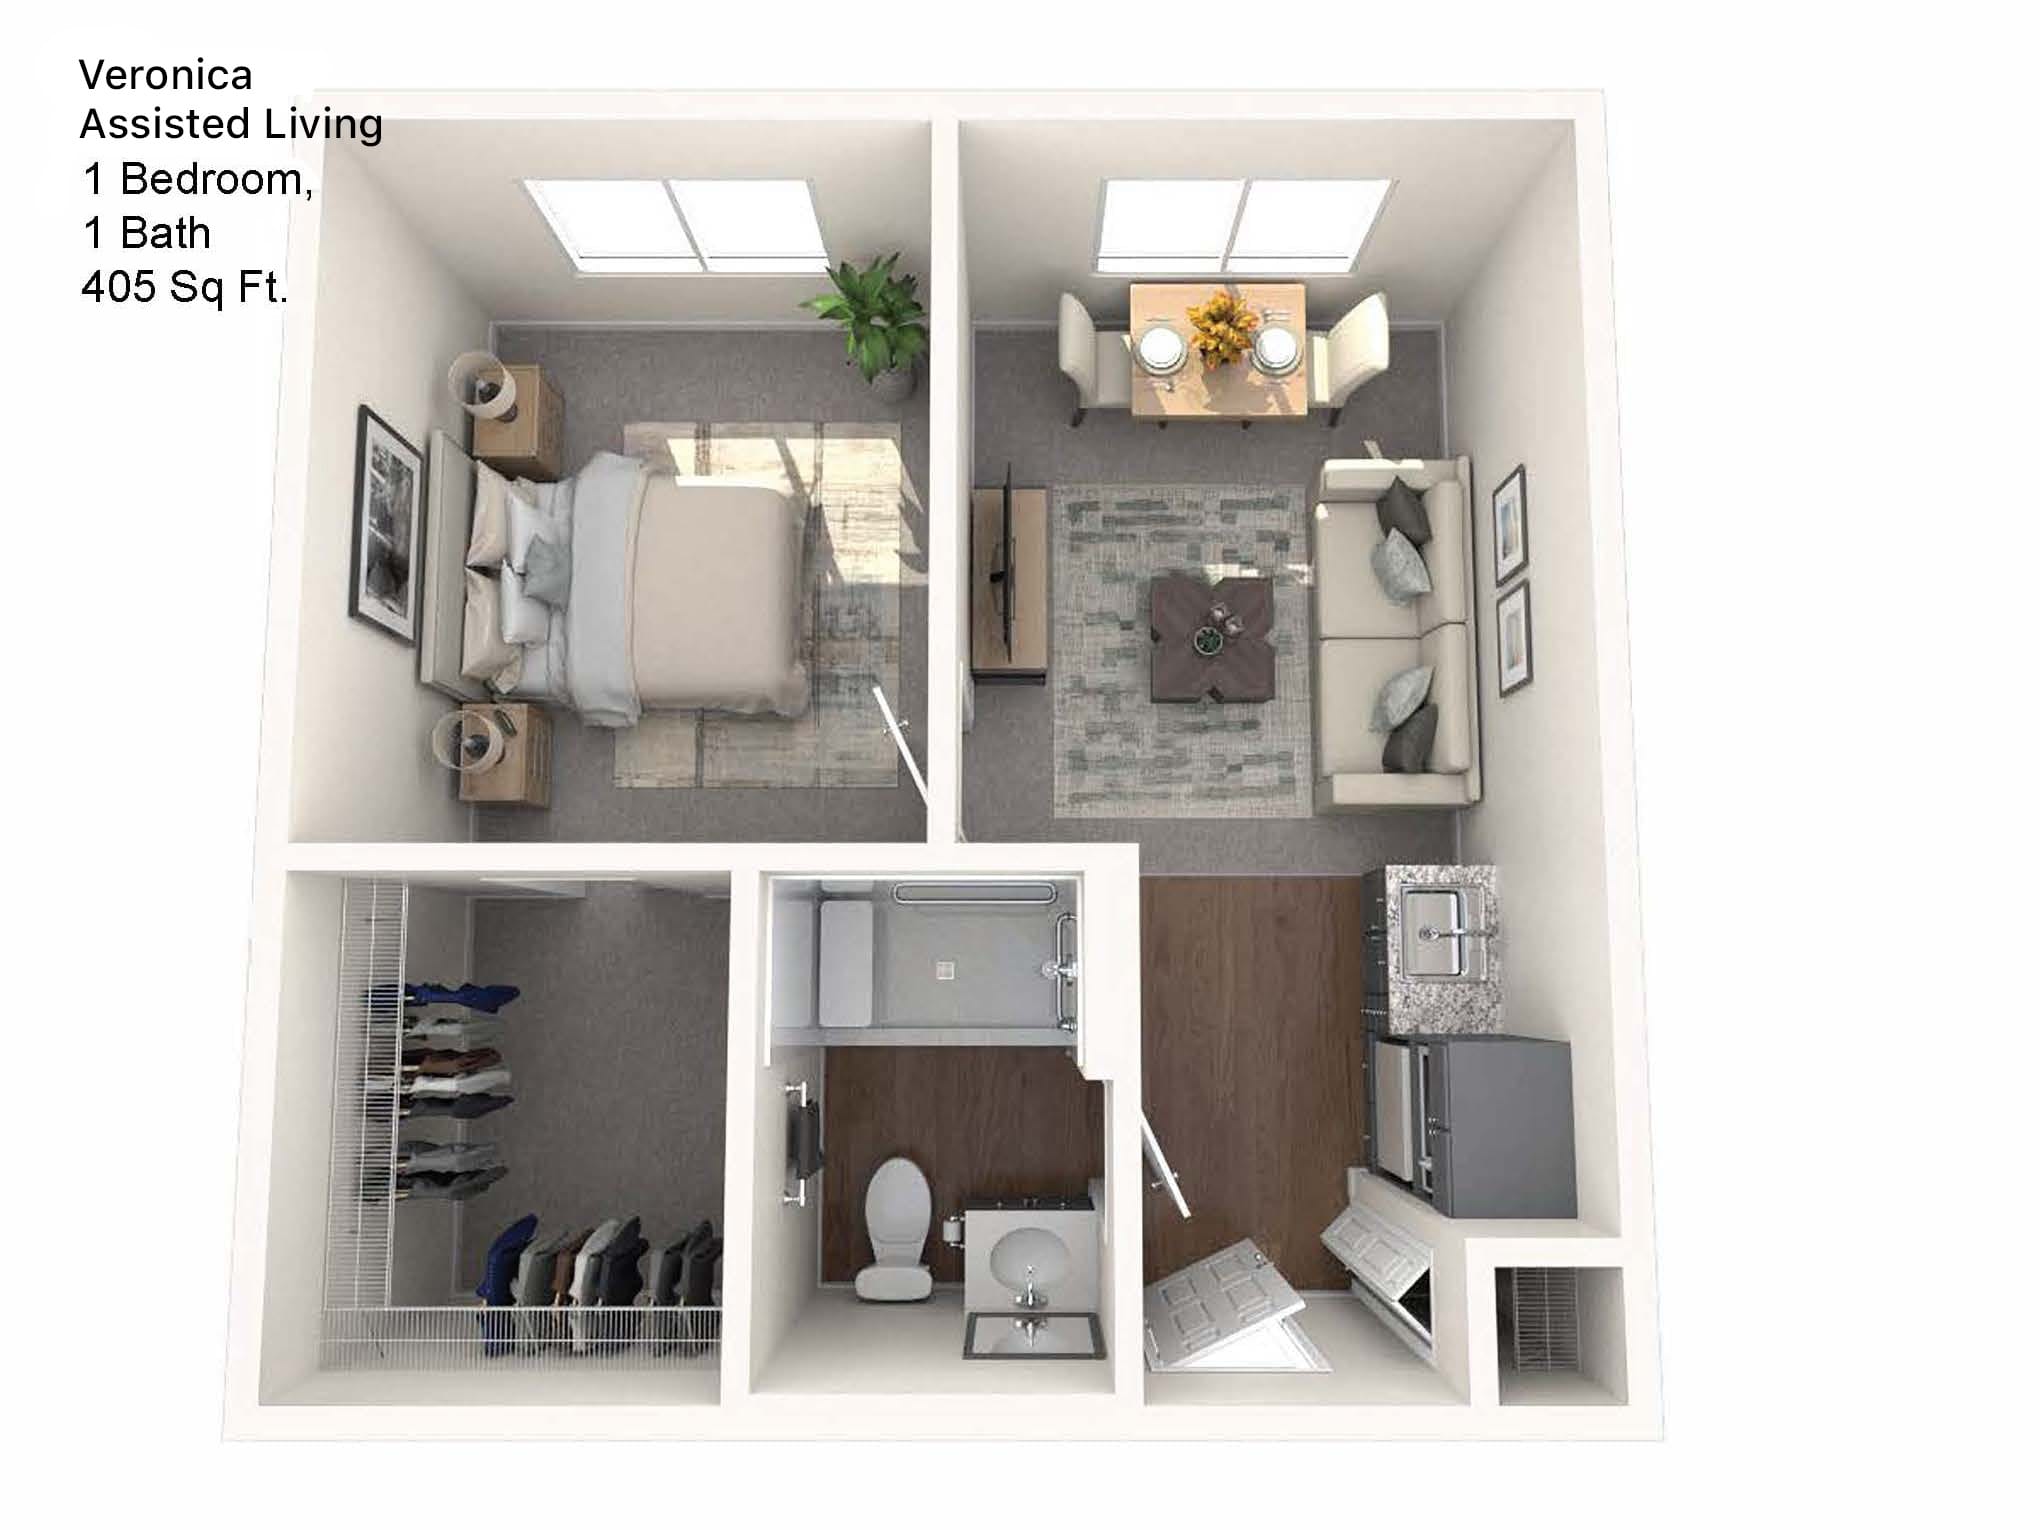 Sarah Community Veronica Assisted Living Floor Plan